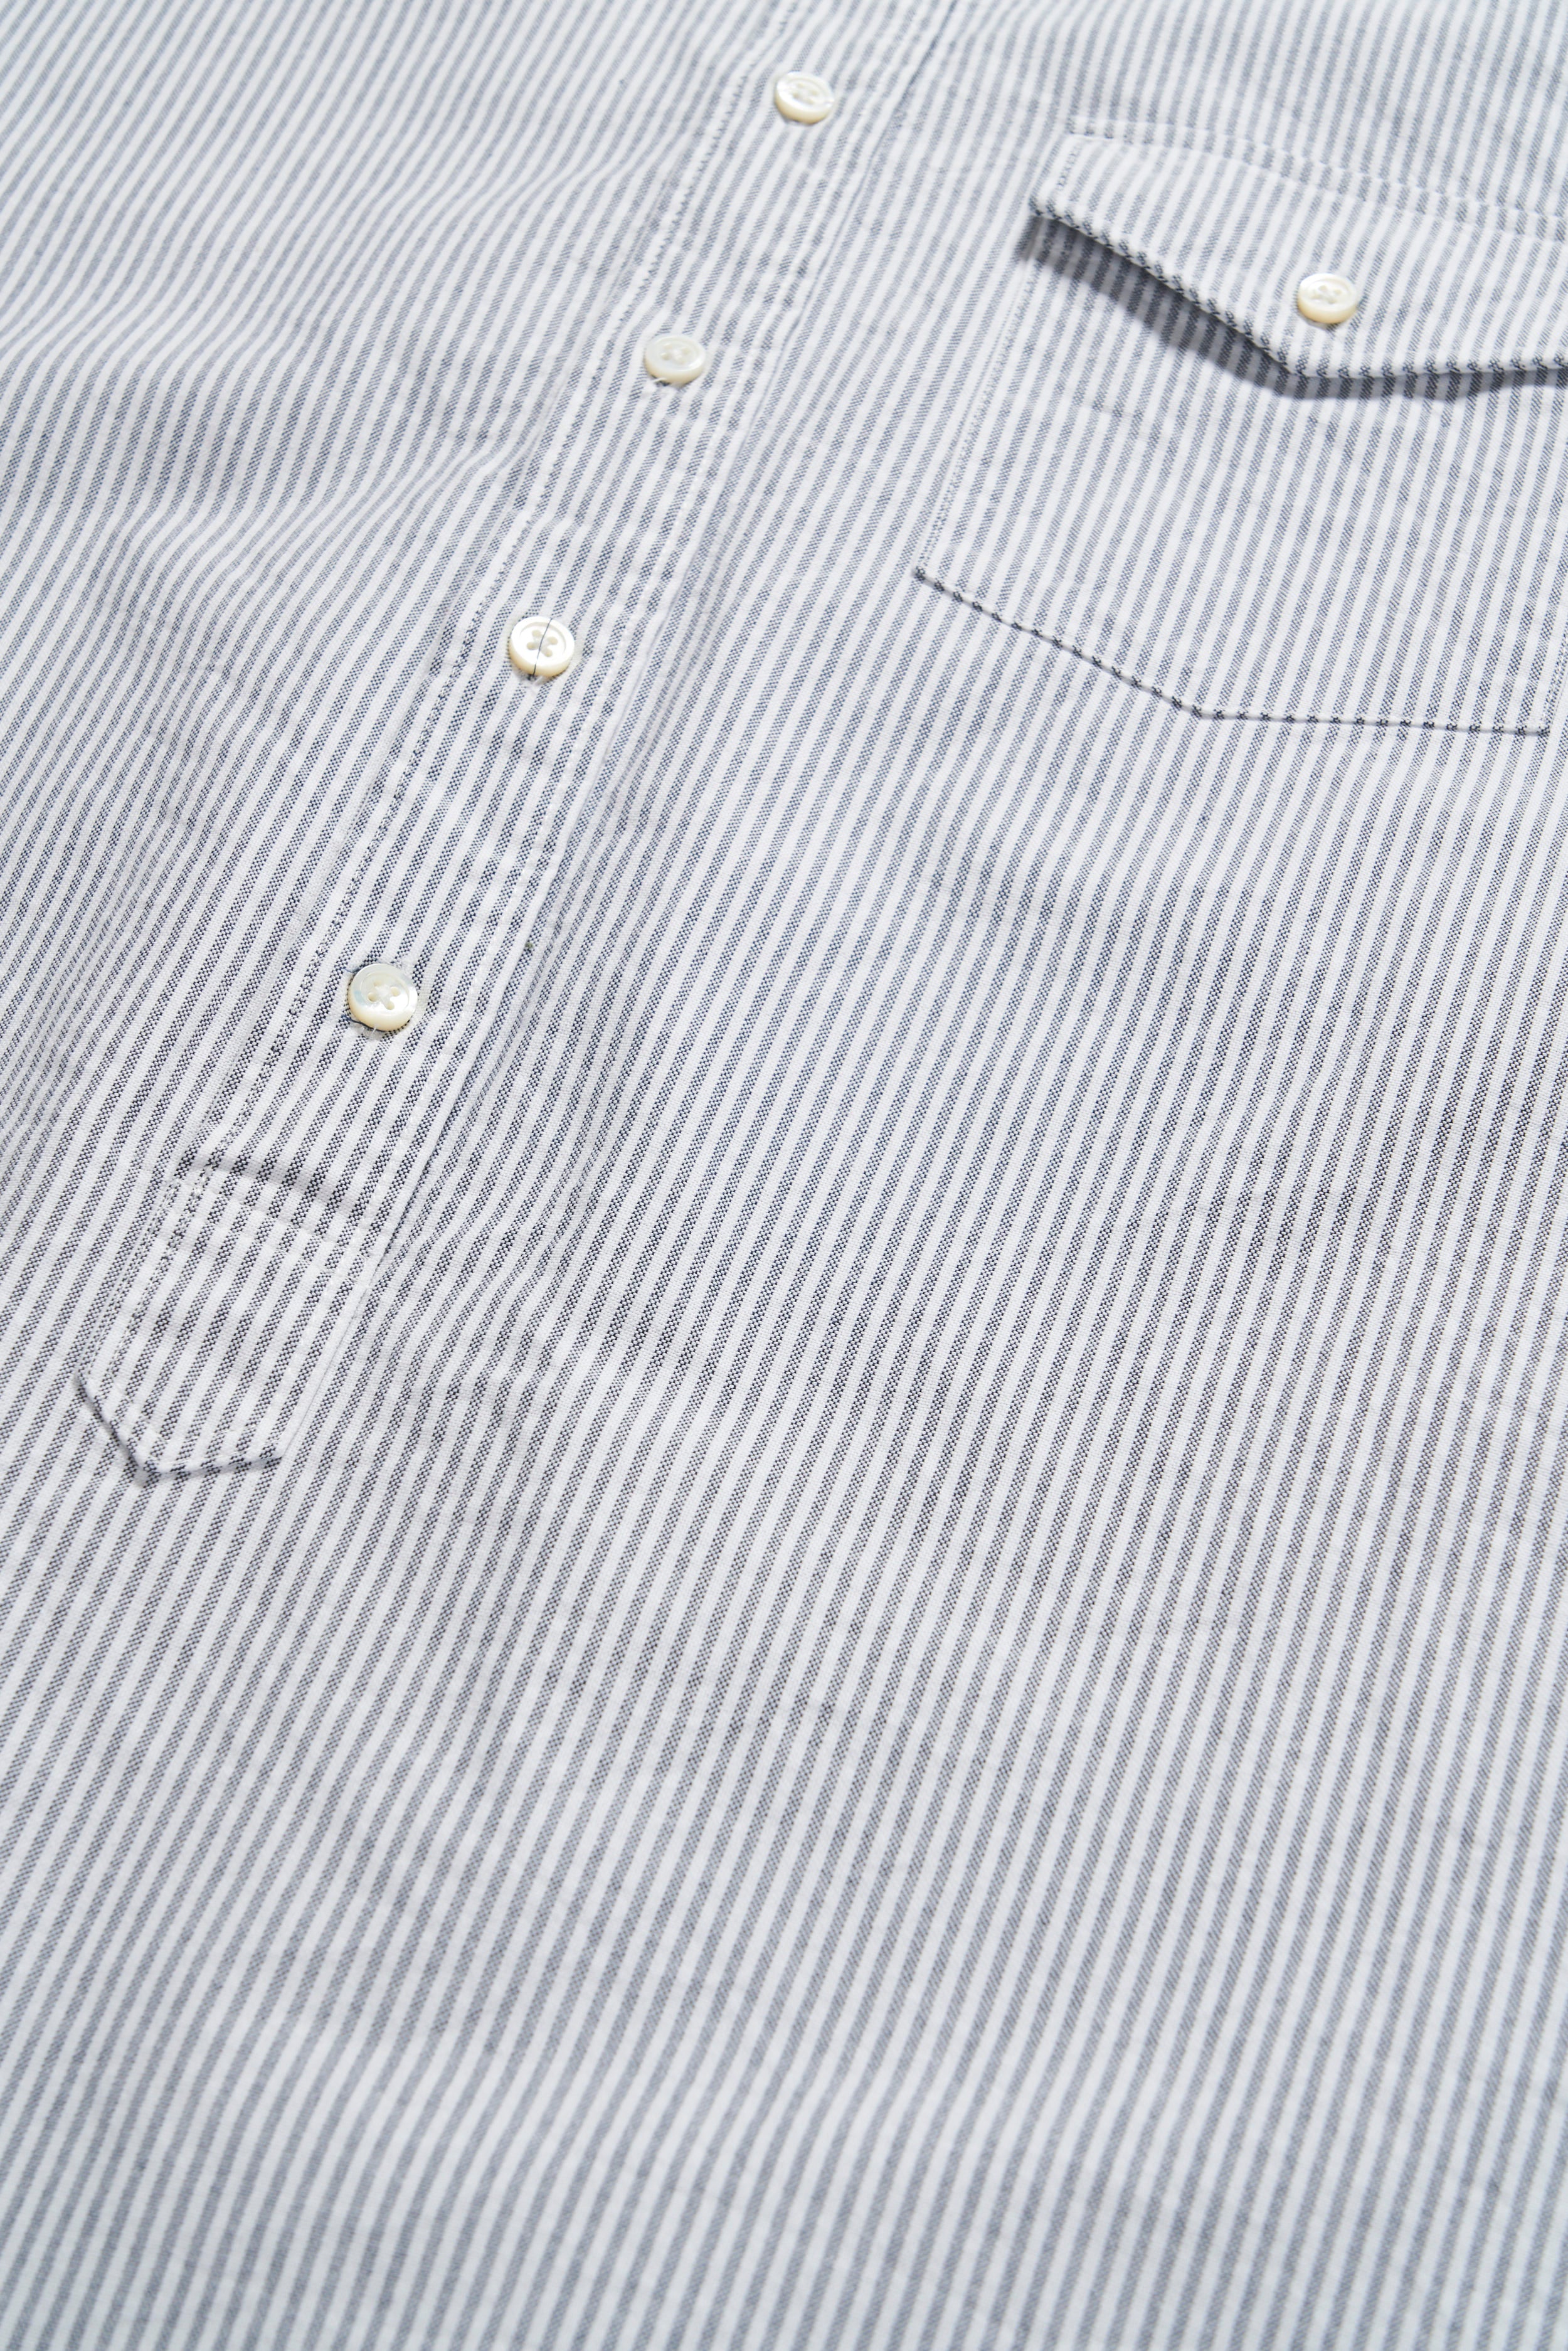 Ivy BD Shirt - Grey Candy Stripe Oxford